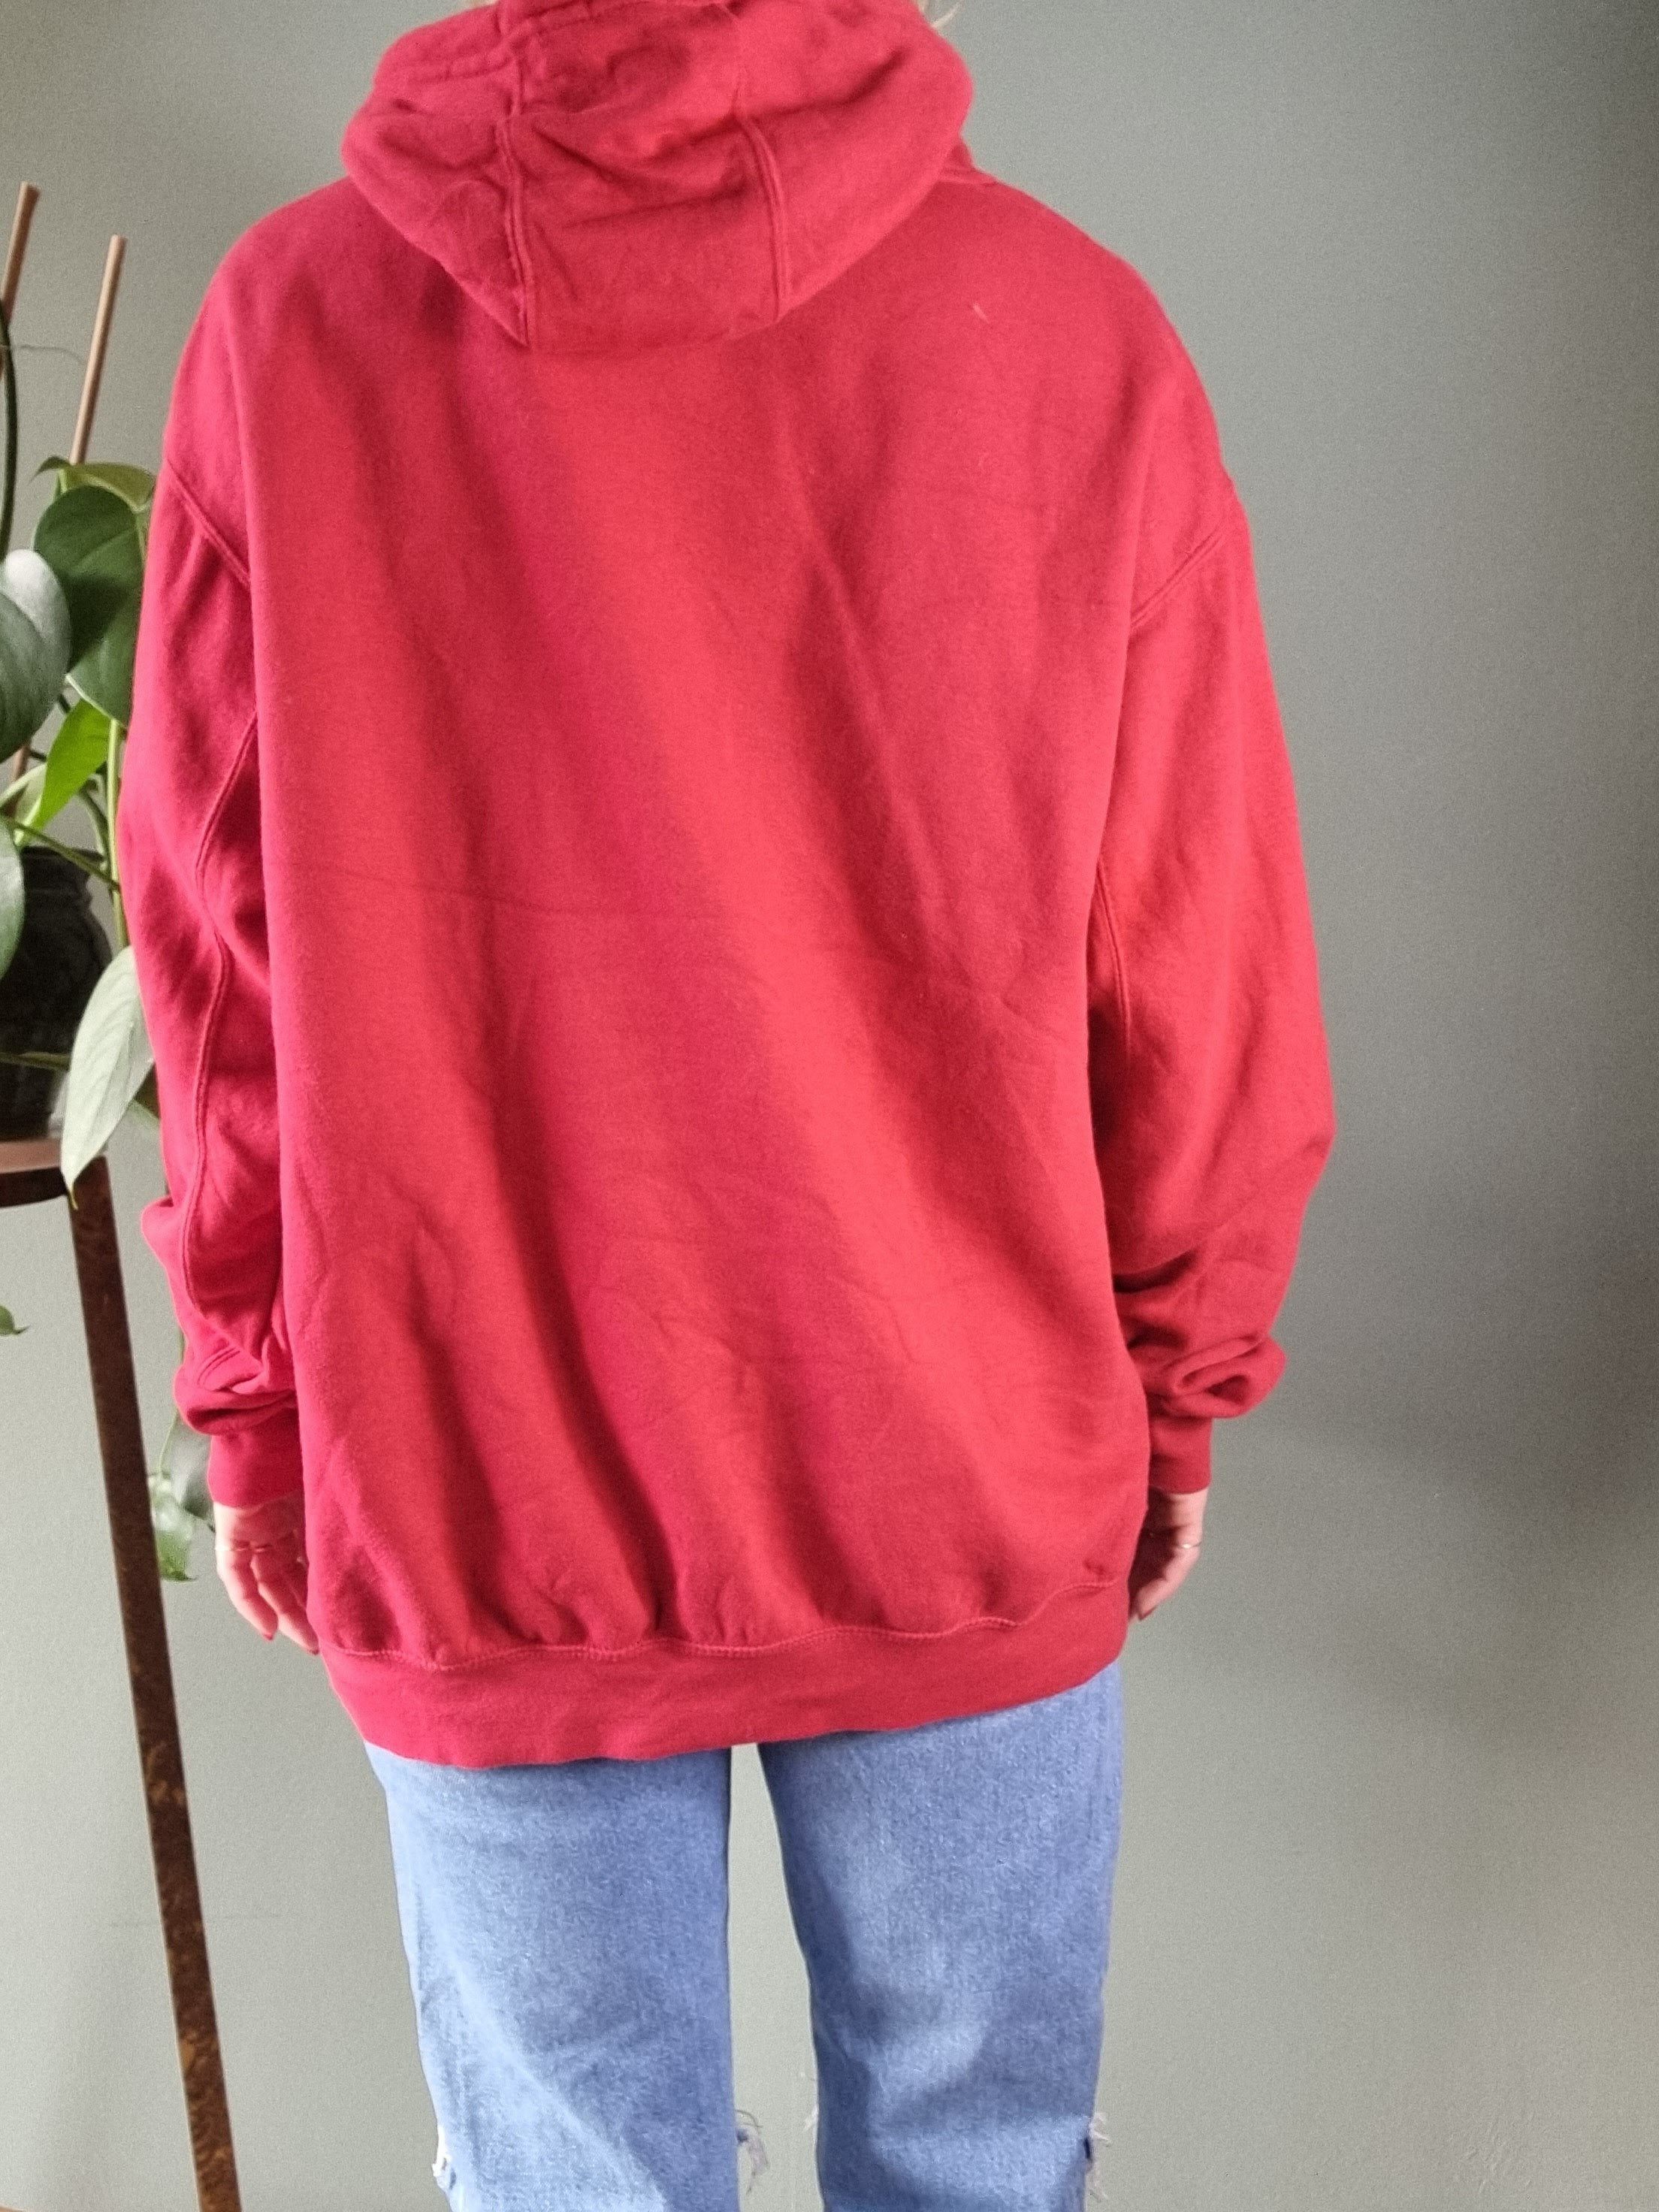 Sweater Tampa bay - XL